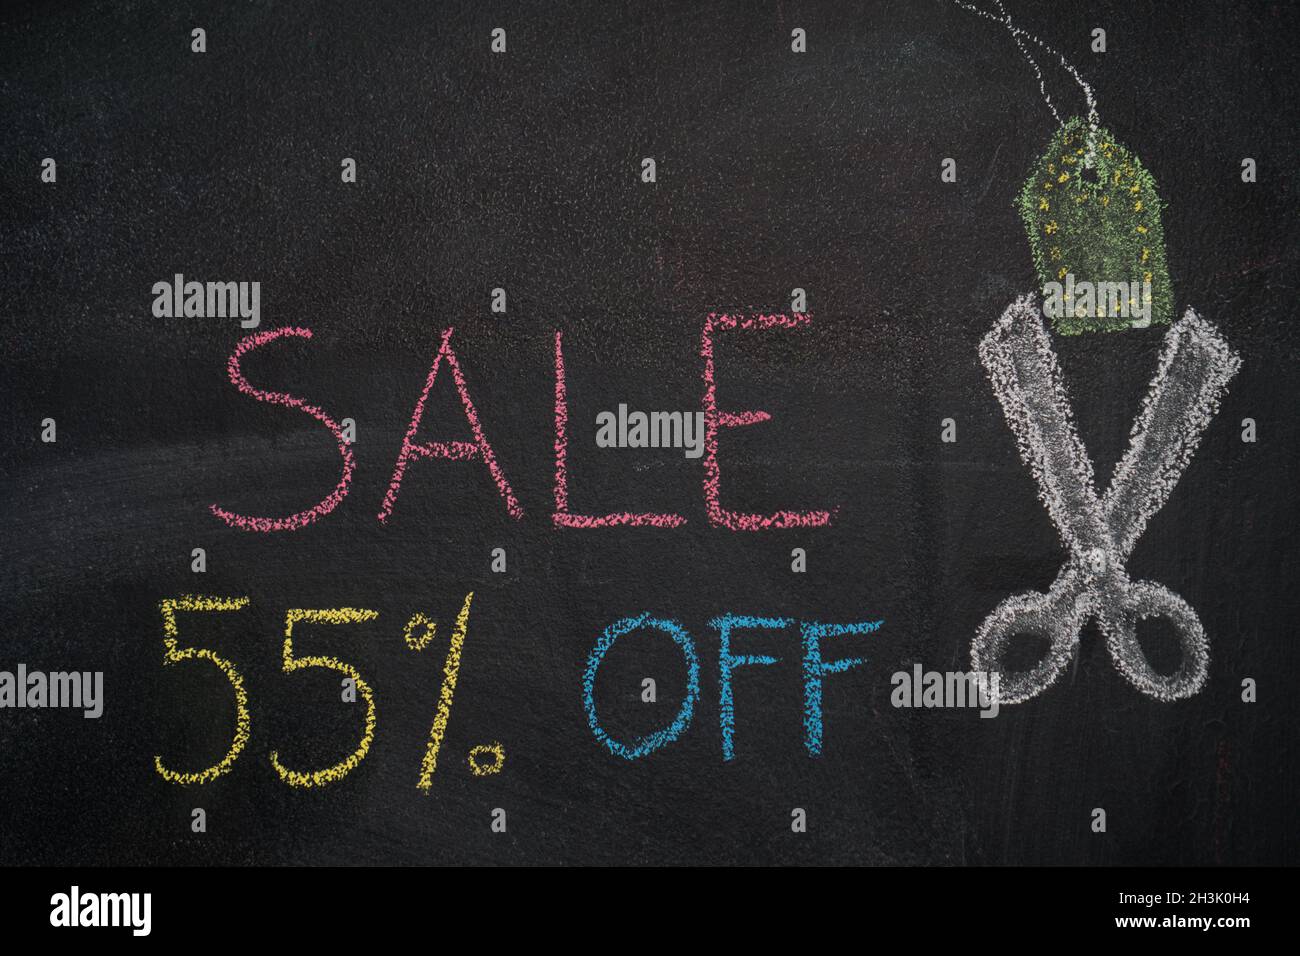 Sale 55% off on chalkboard Stock Photo